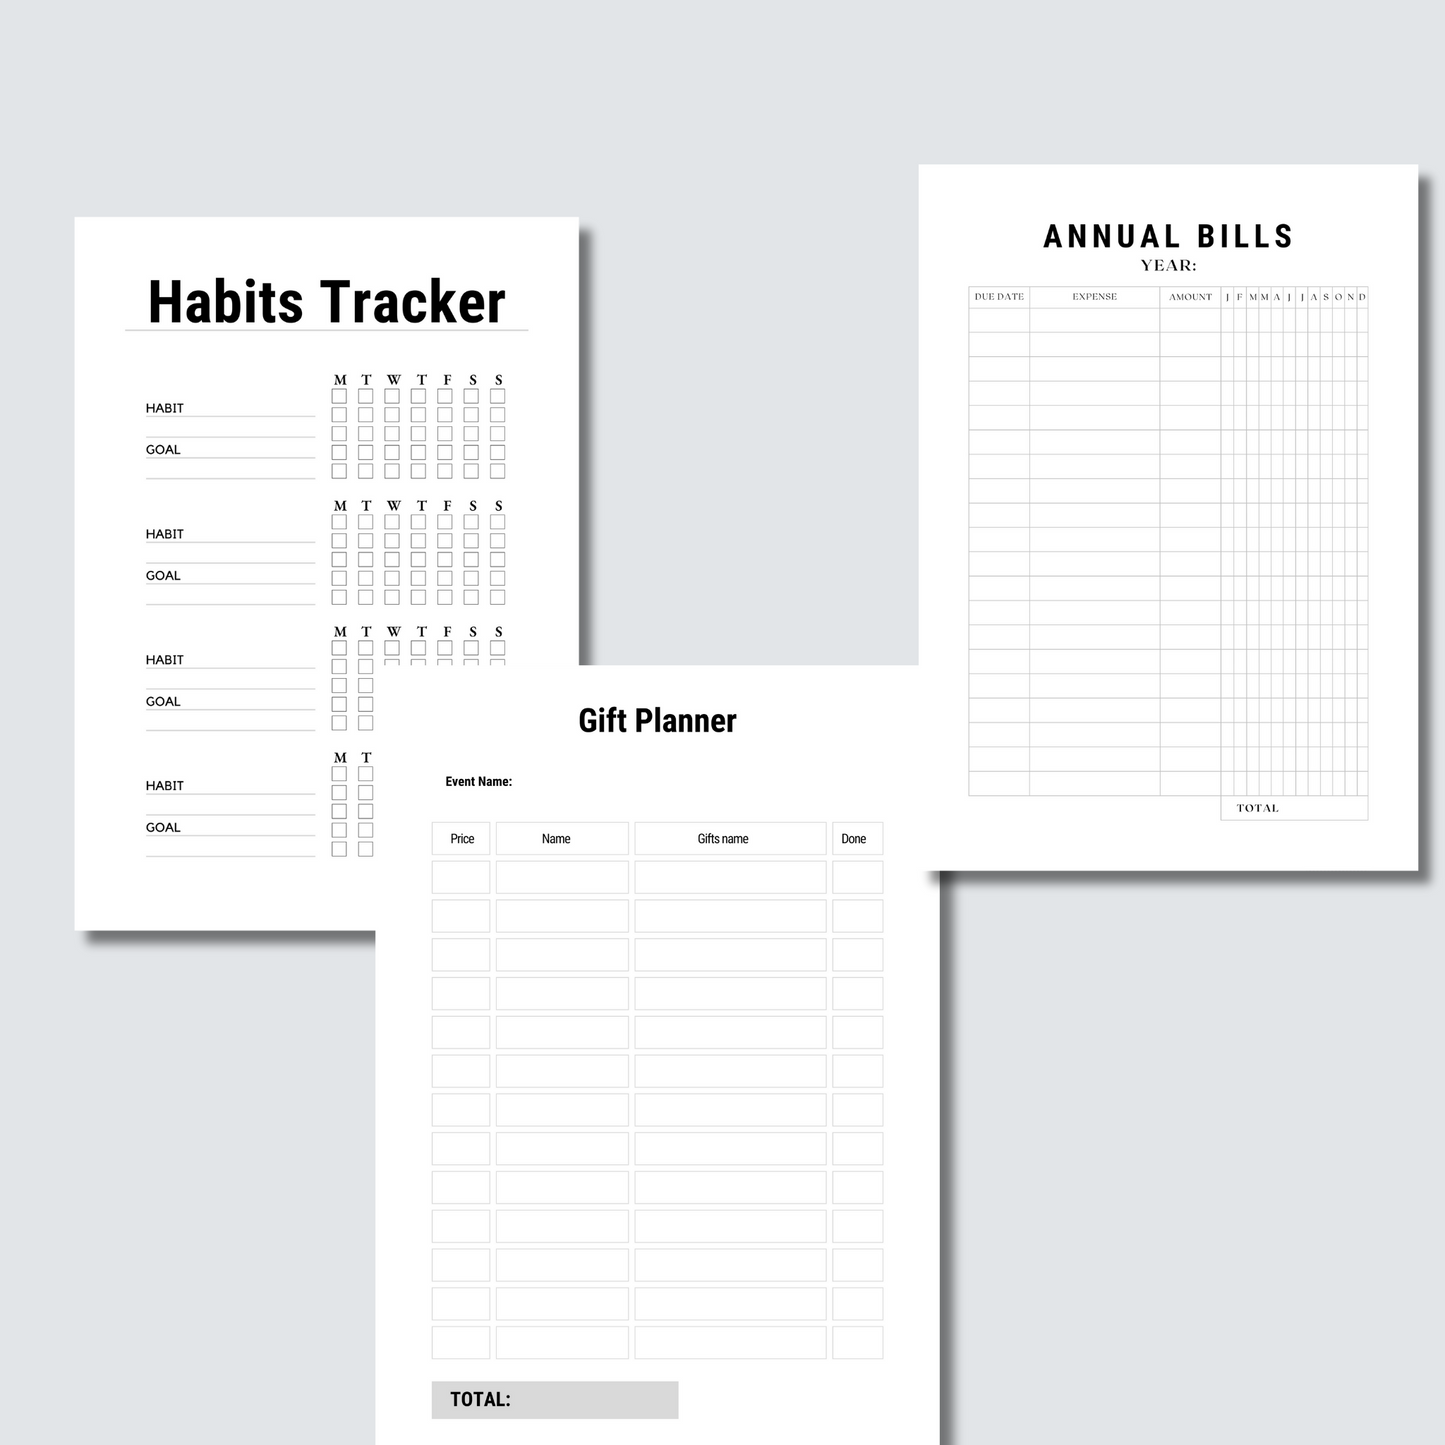 habit tracker, annual bills, gift tracker